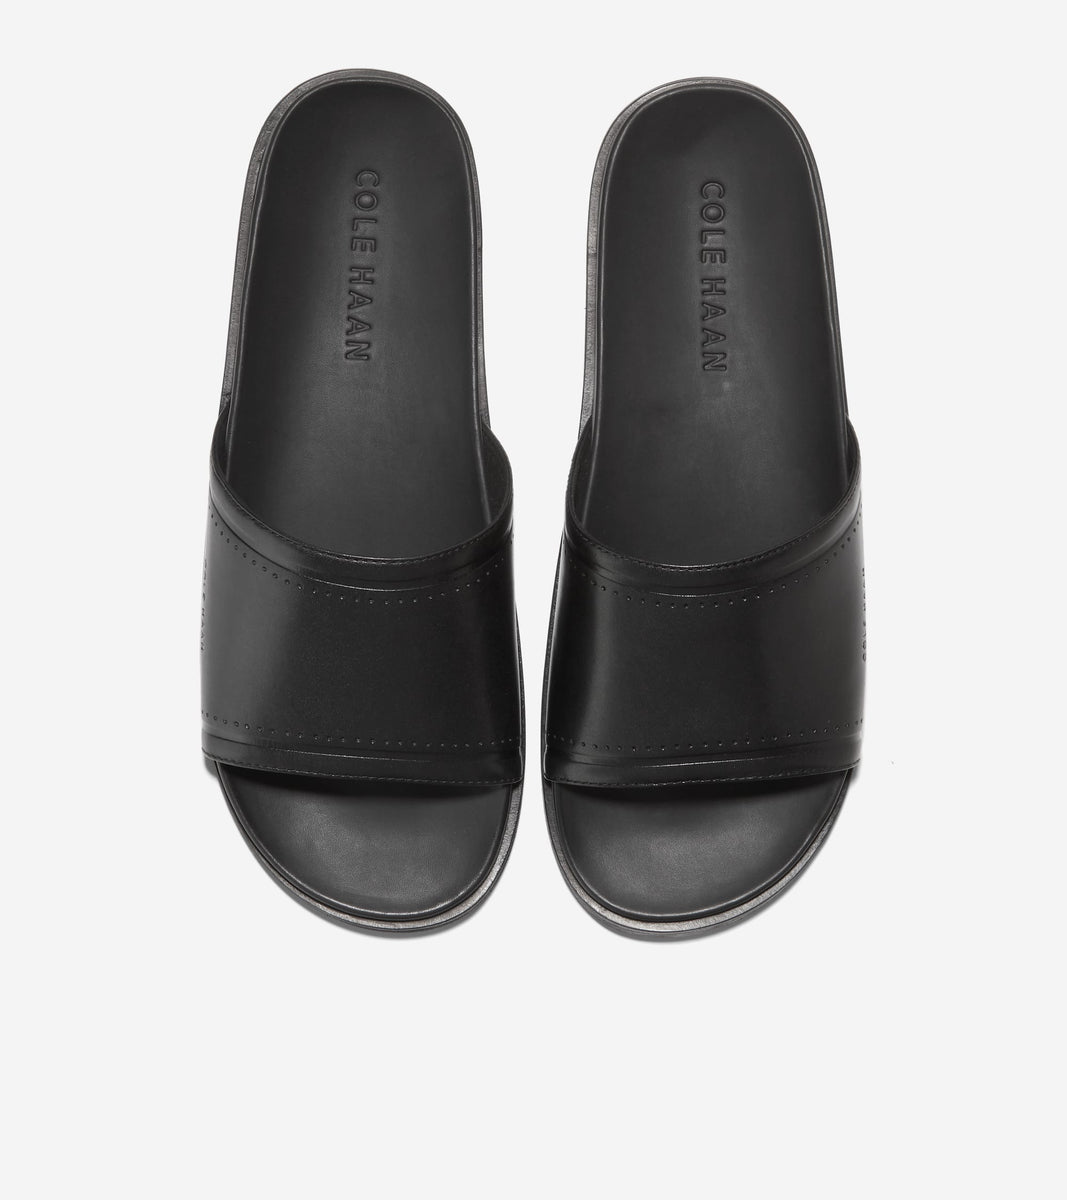 Sandals Heels Wedge By Cole-haan Size: 9